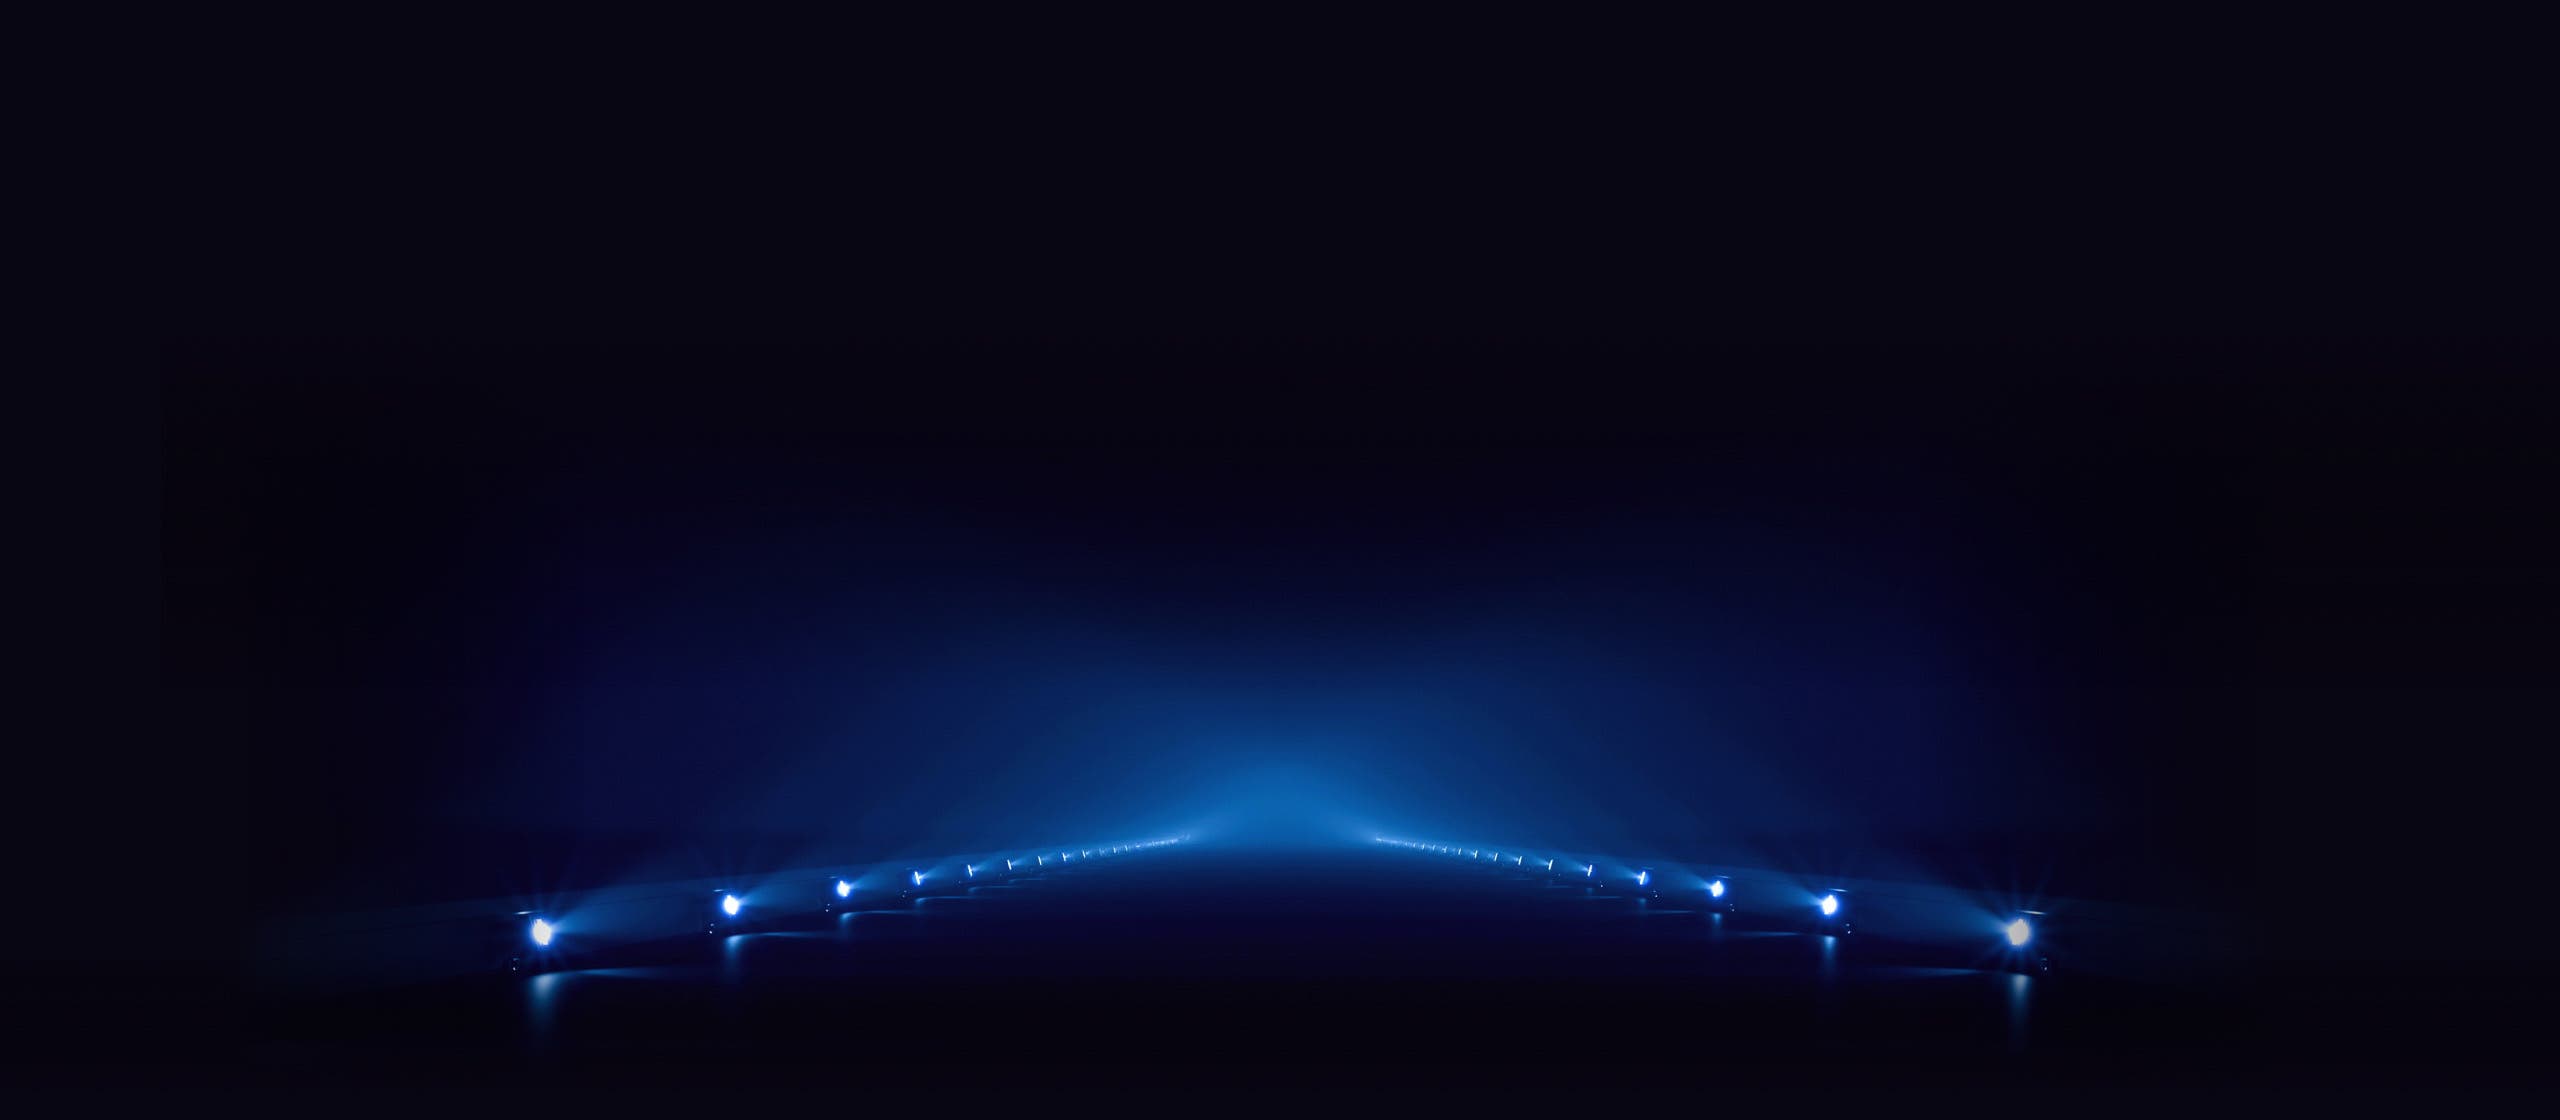  Imagen de luces de aterrizaje